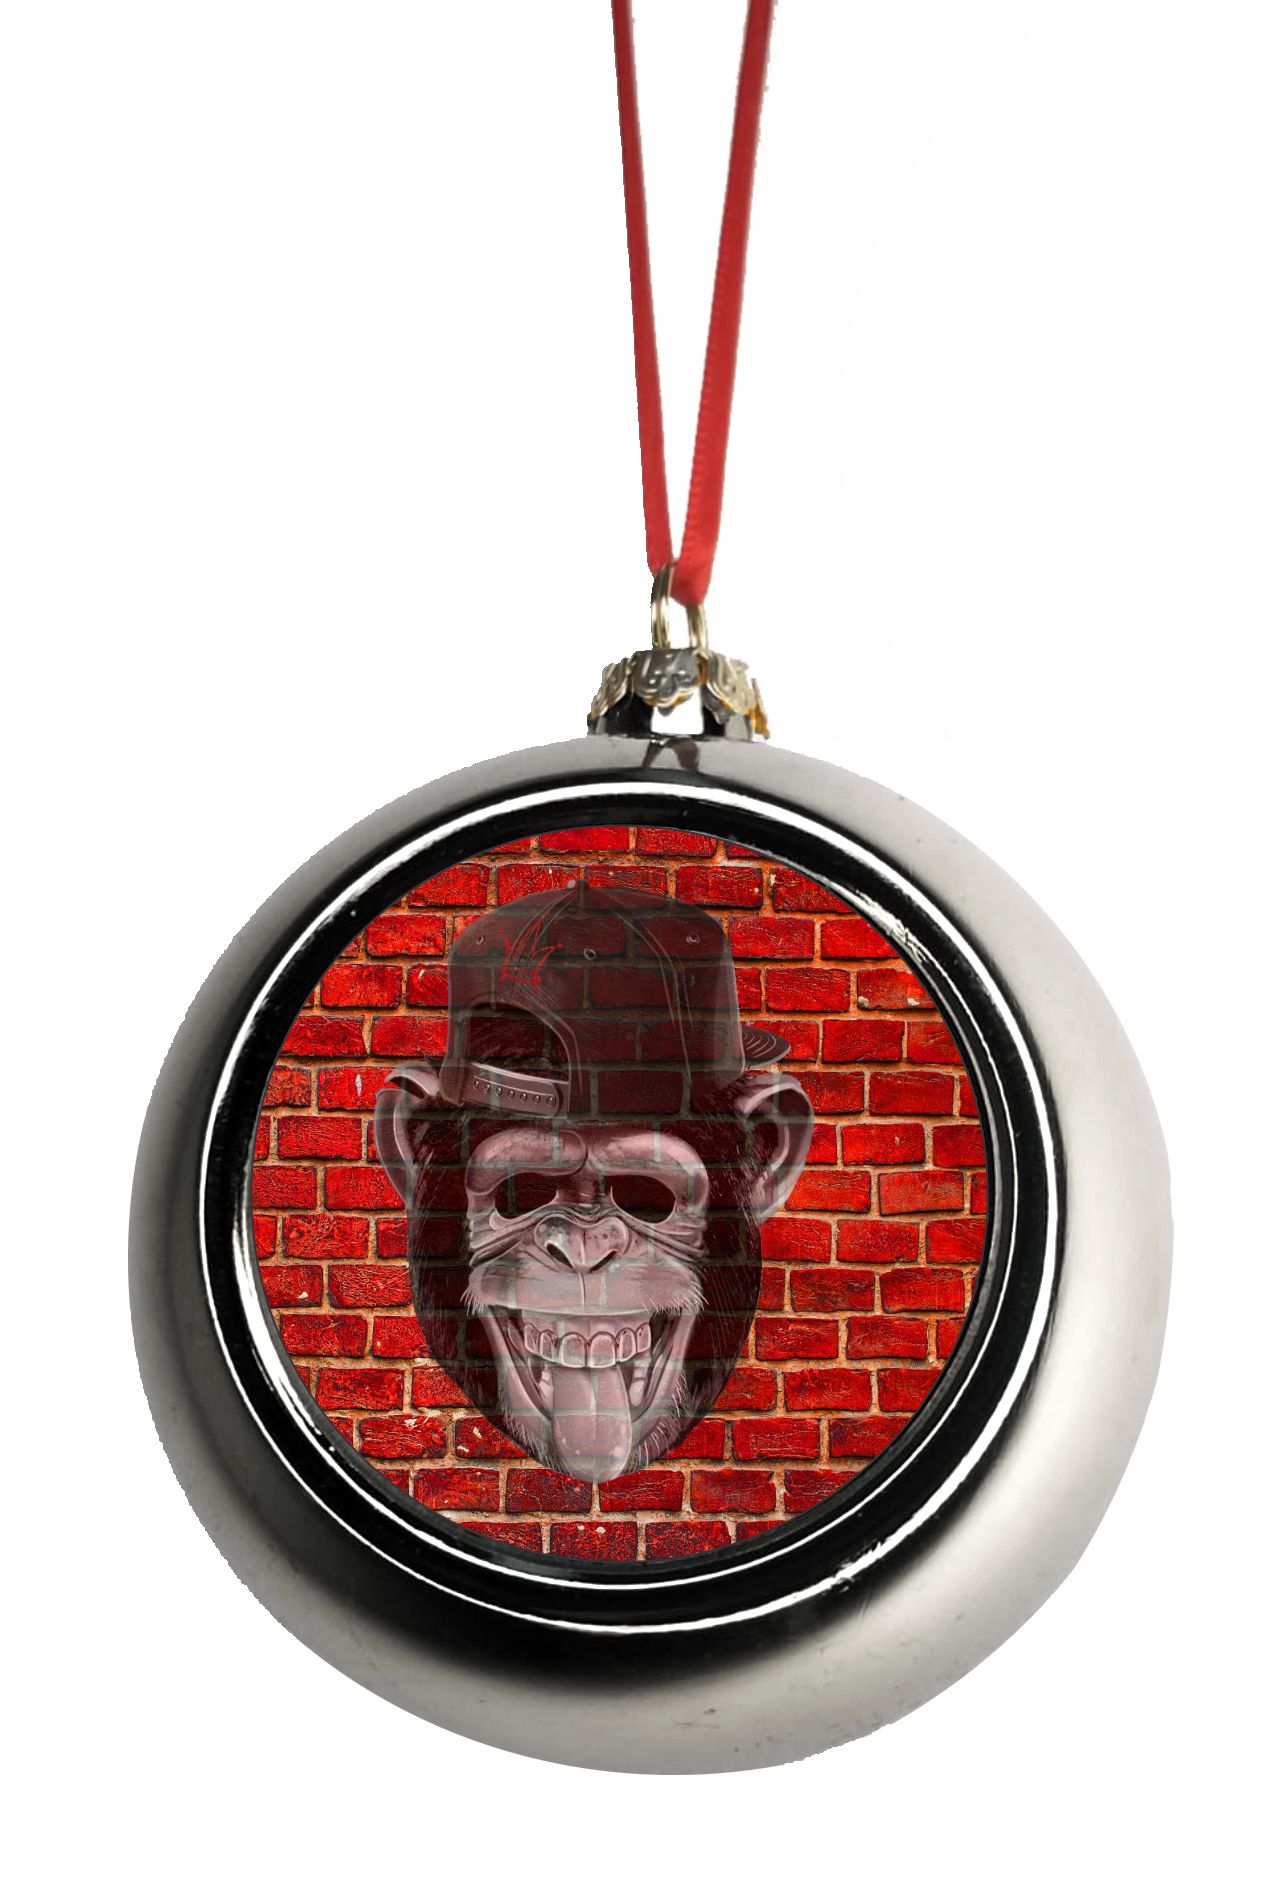 Ornaments Funny Monkey Punk on Brick Wall Graffiti Street Art Print Design Bauble Christmas Ornaments Silver Bauble Tree Xmas Balls - image 1 of 2